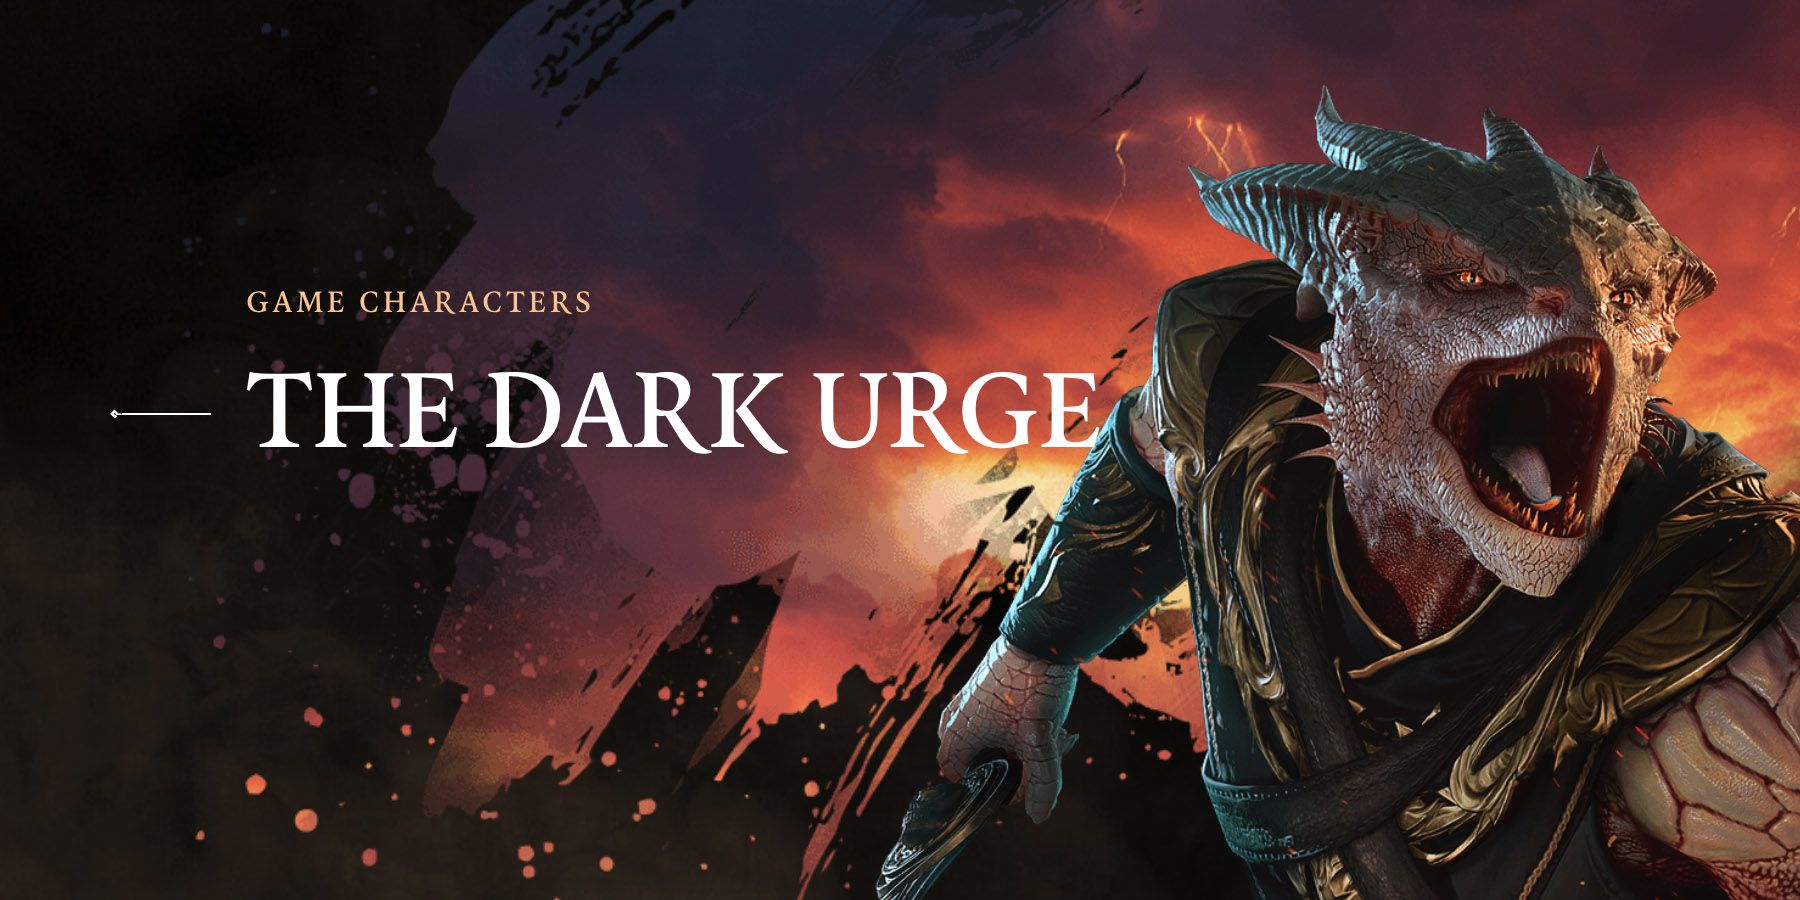 The Dark Urge in Baldurs Gate 3